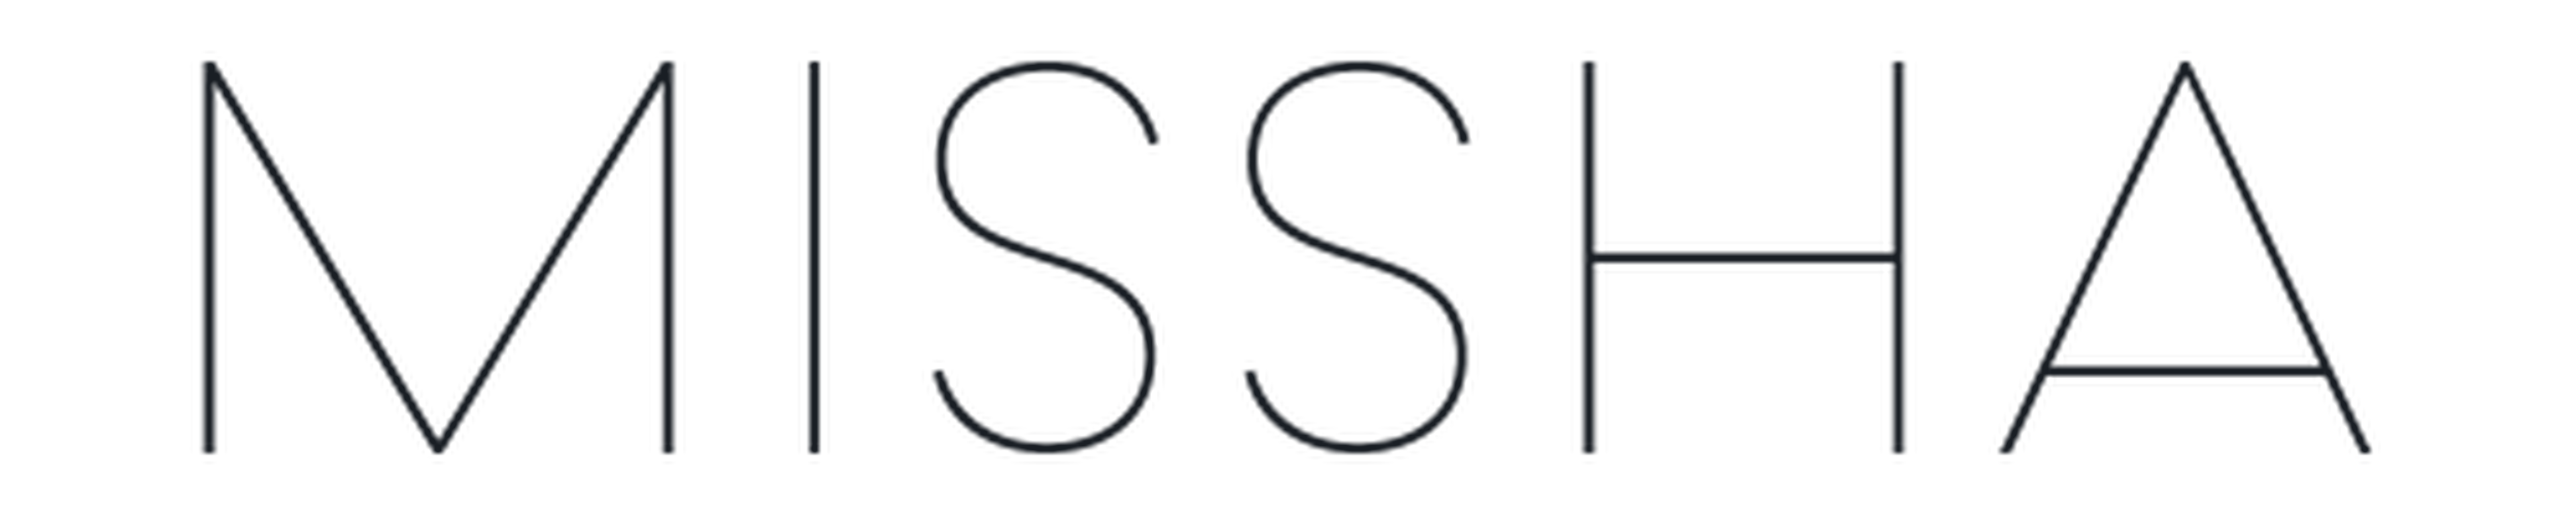 Missha logotype